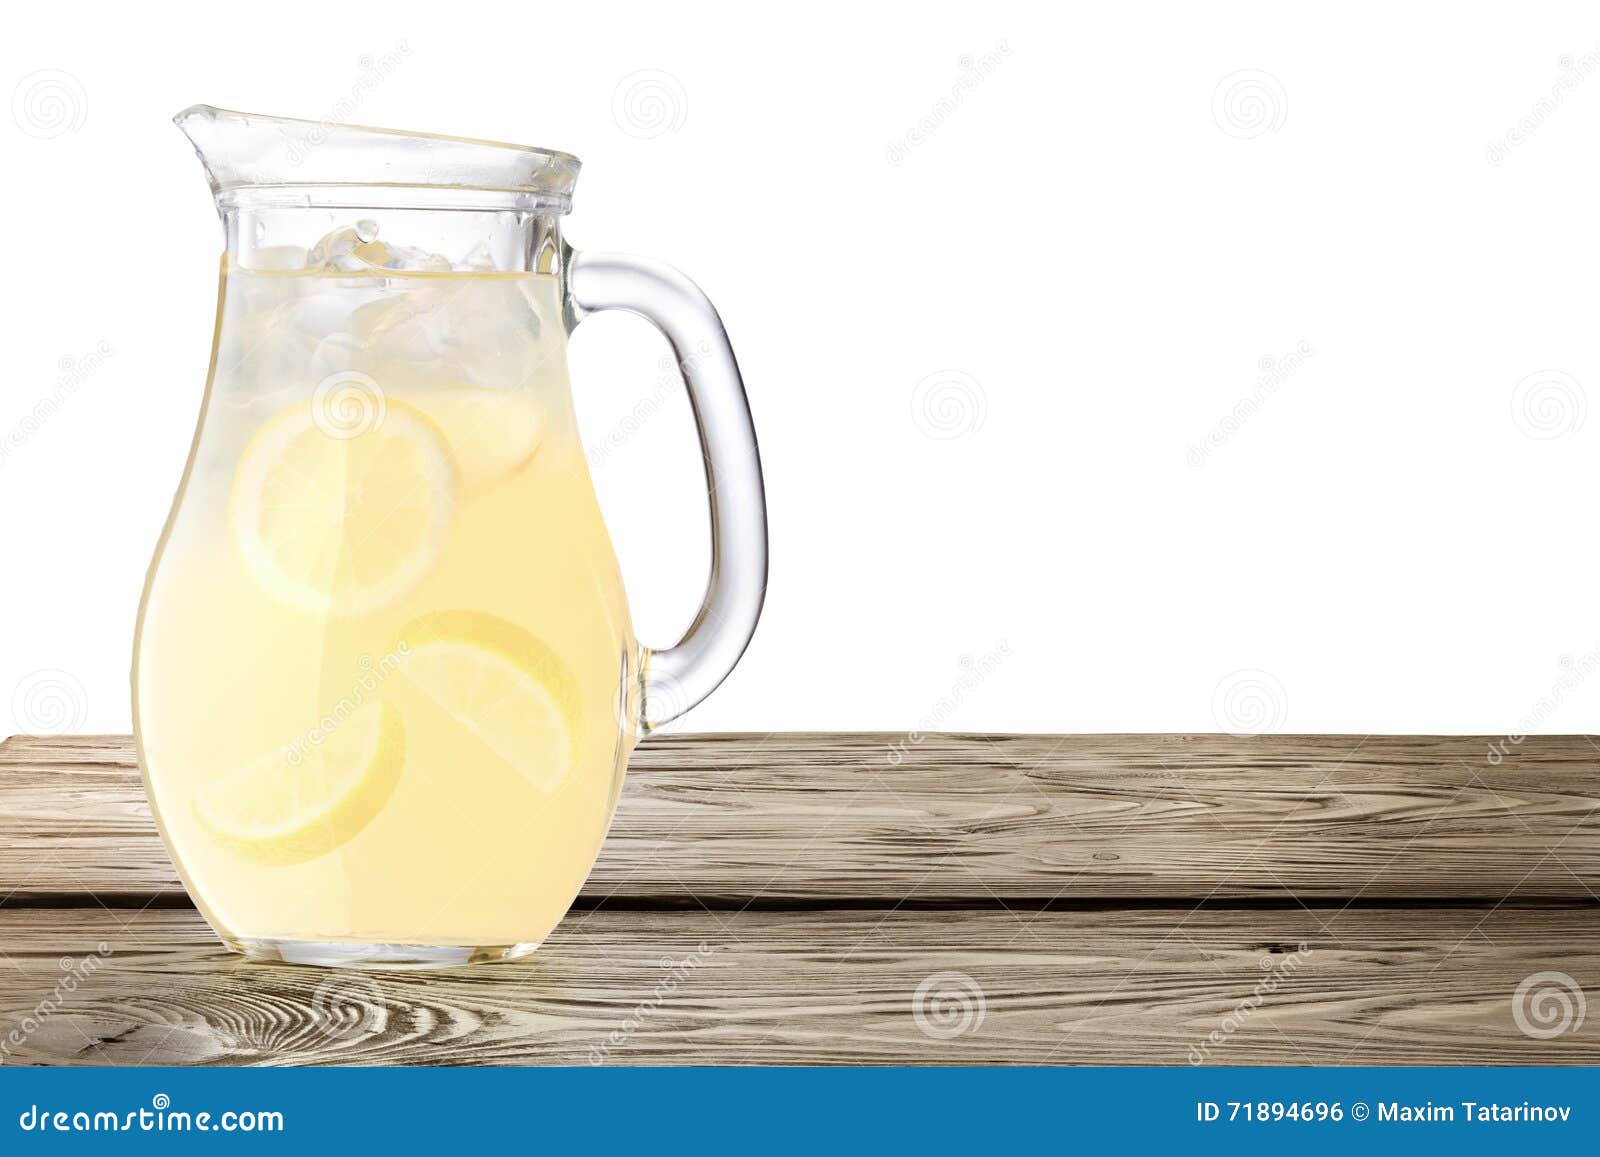 lemonade pitcher on wooden table